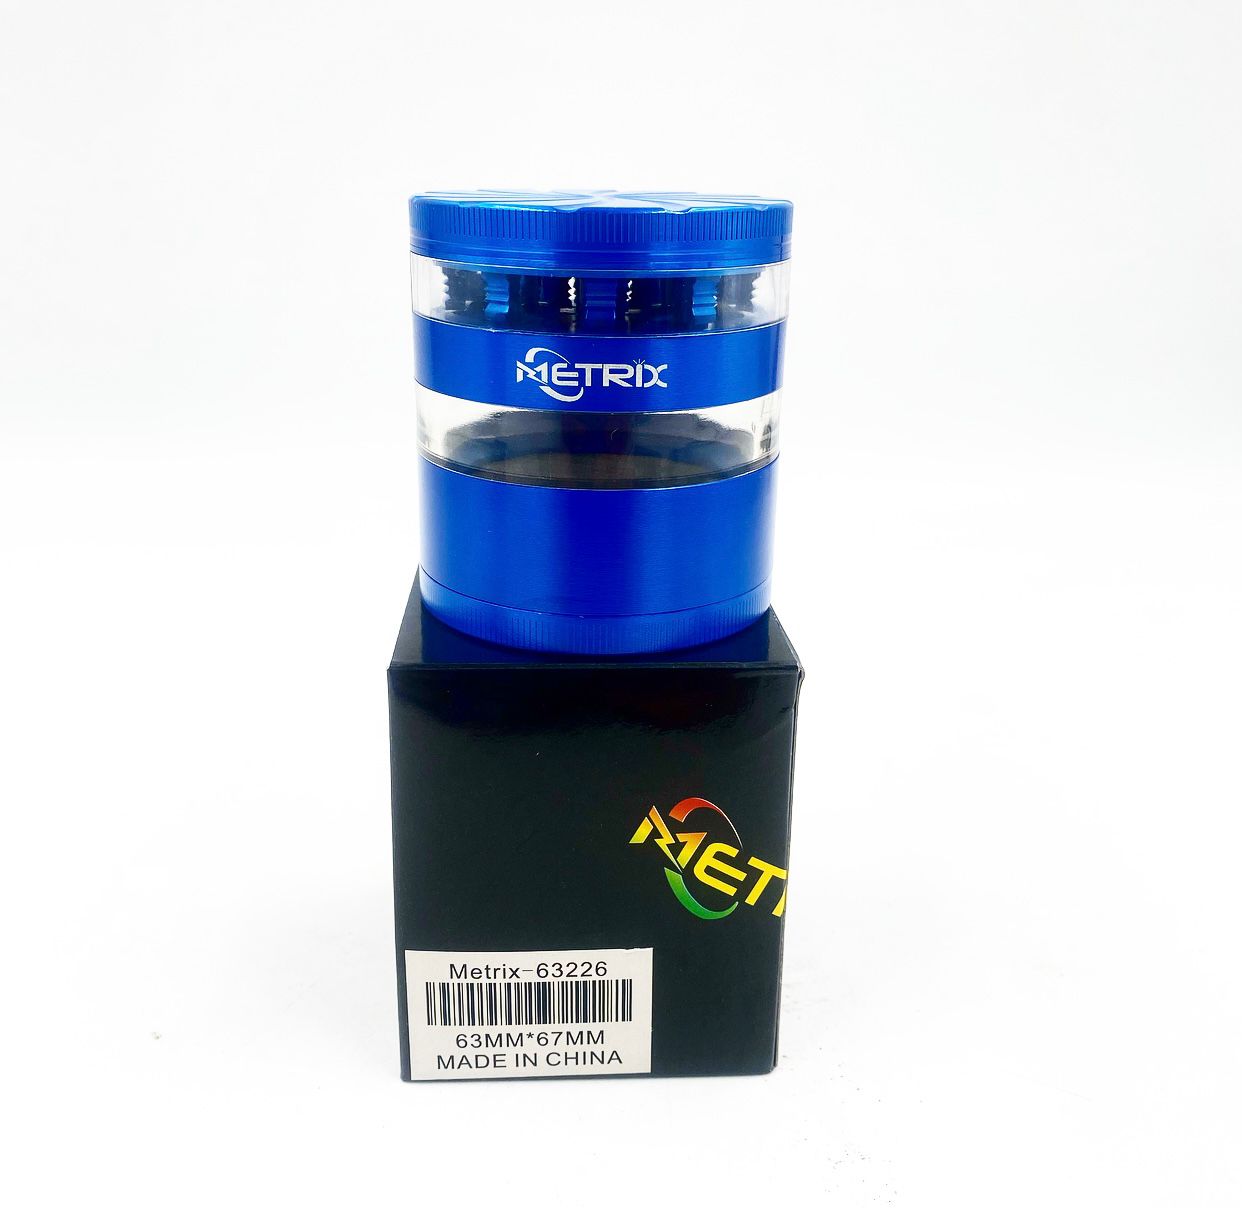 Metrix-63226 Two Layer Blue Grinder